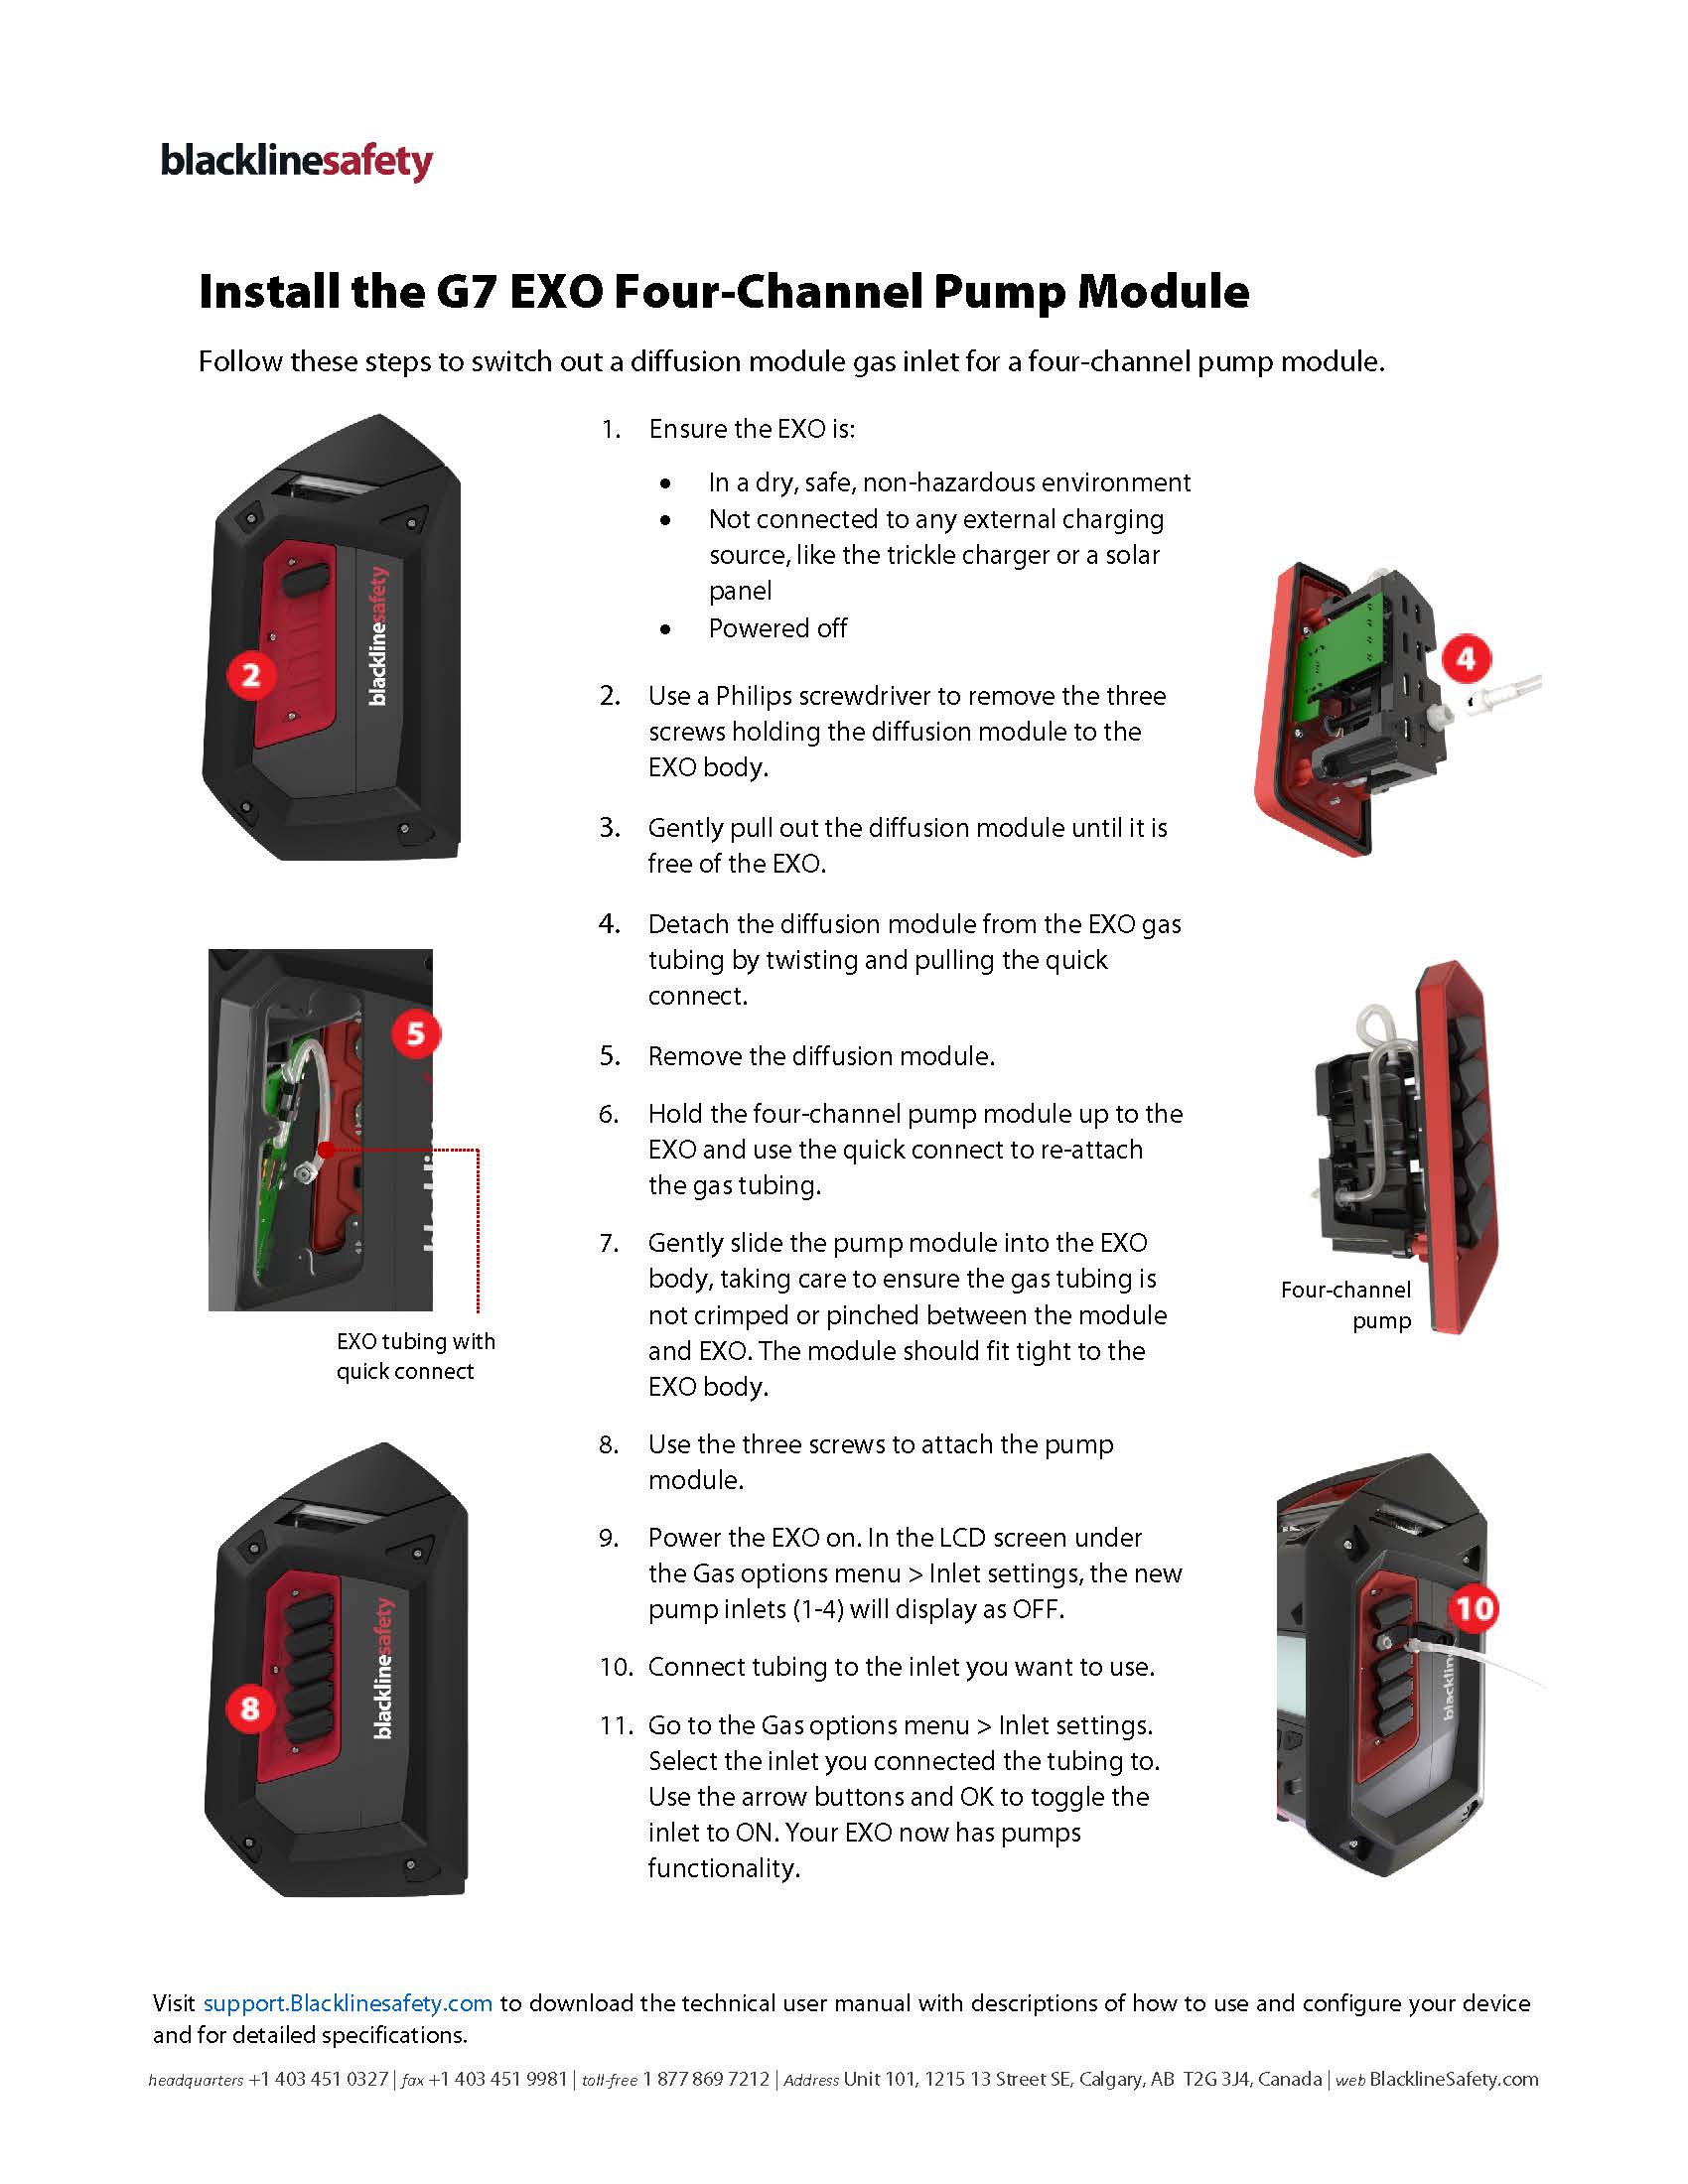 G7 EXO Pump Installation Guide